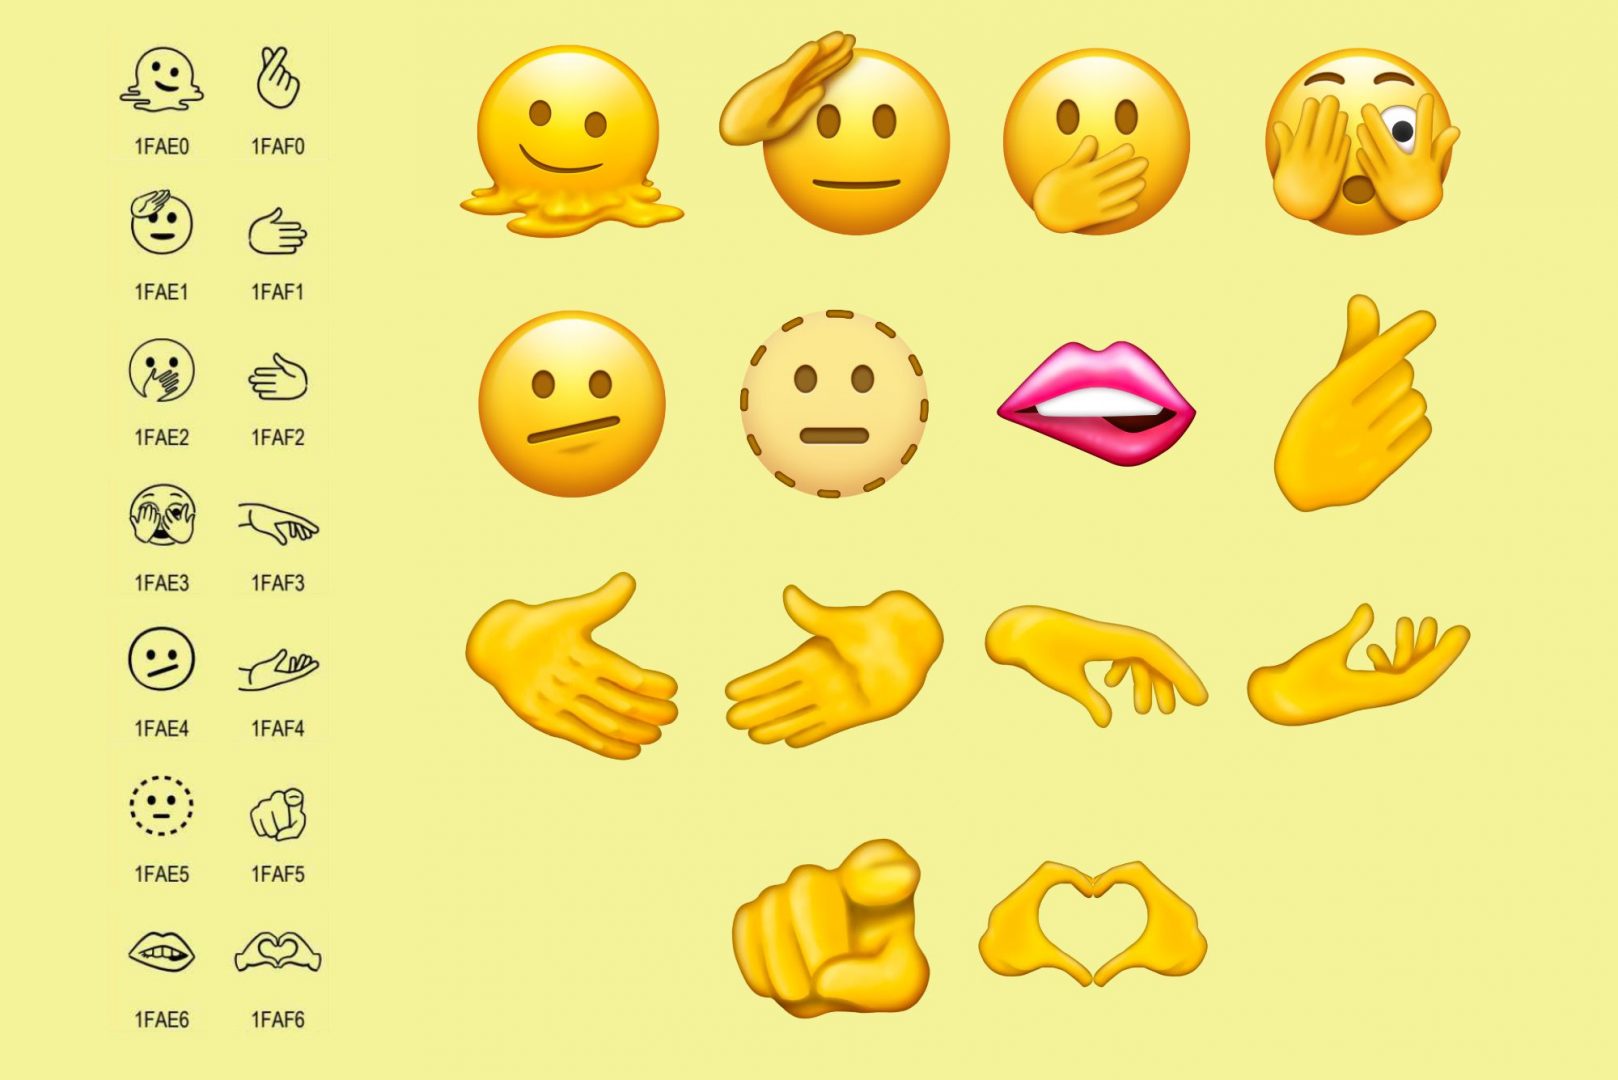 Unicode-Standard-Surum-4.0-Emoji-1618x1080.jpg